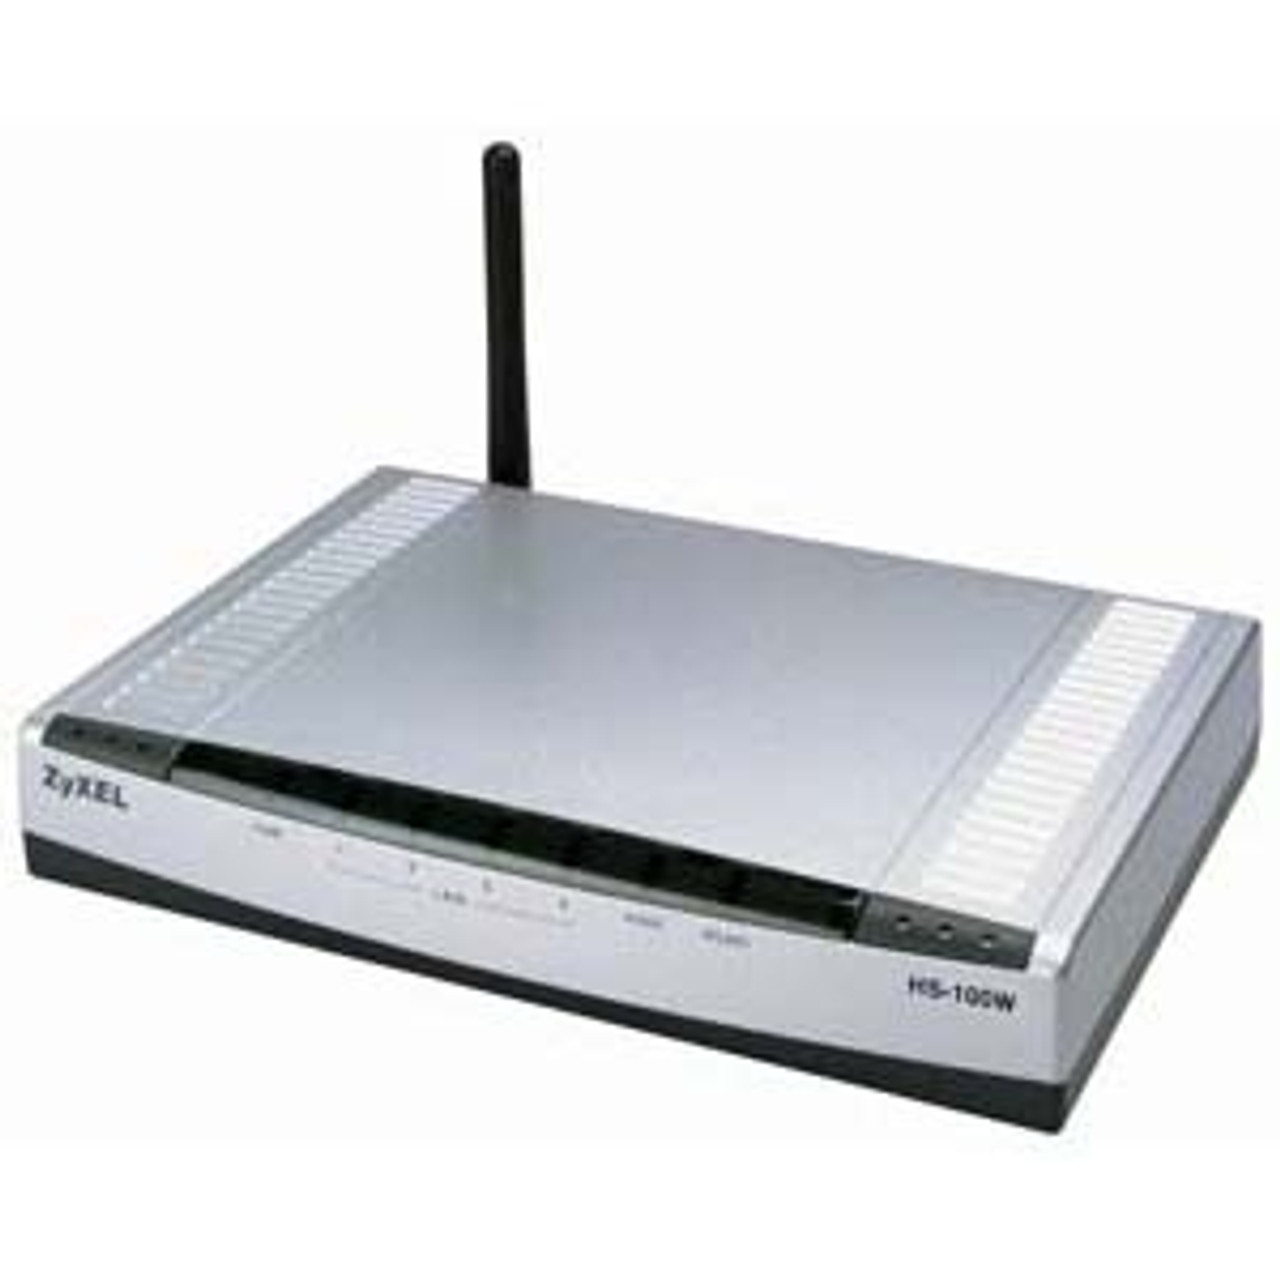 91-003-153001 Zyxel HS-100W HomeSafe Parental Control Gateway Router (Refurbished)